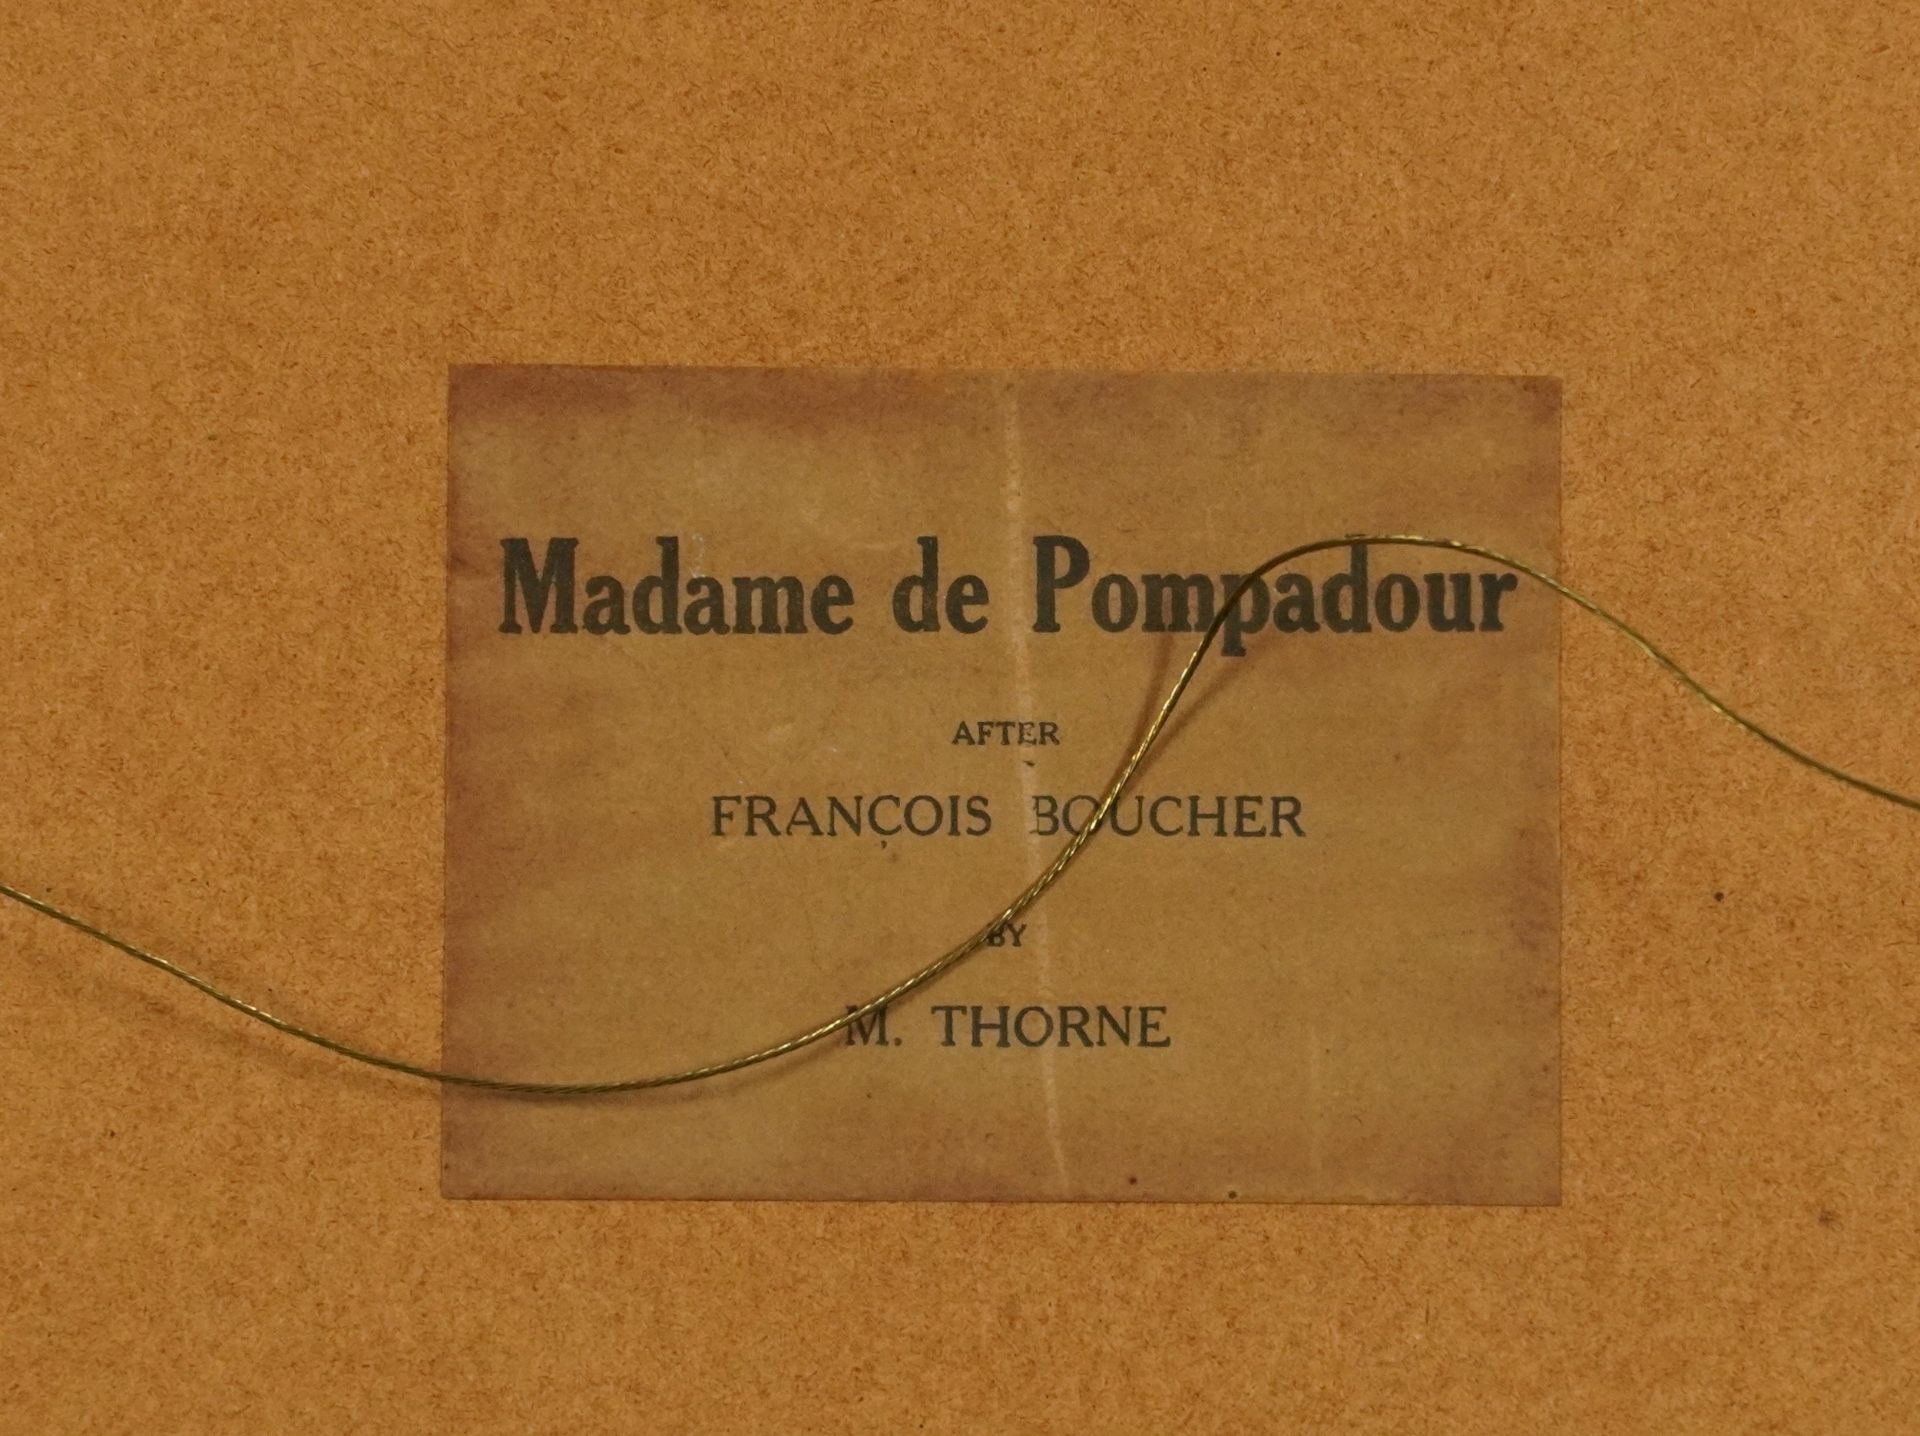 After Francois Boucher - Madame de Pompadour, pencil signed print in colour, signed M Thorne, - Image 5 of 6